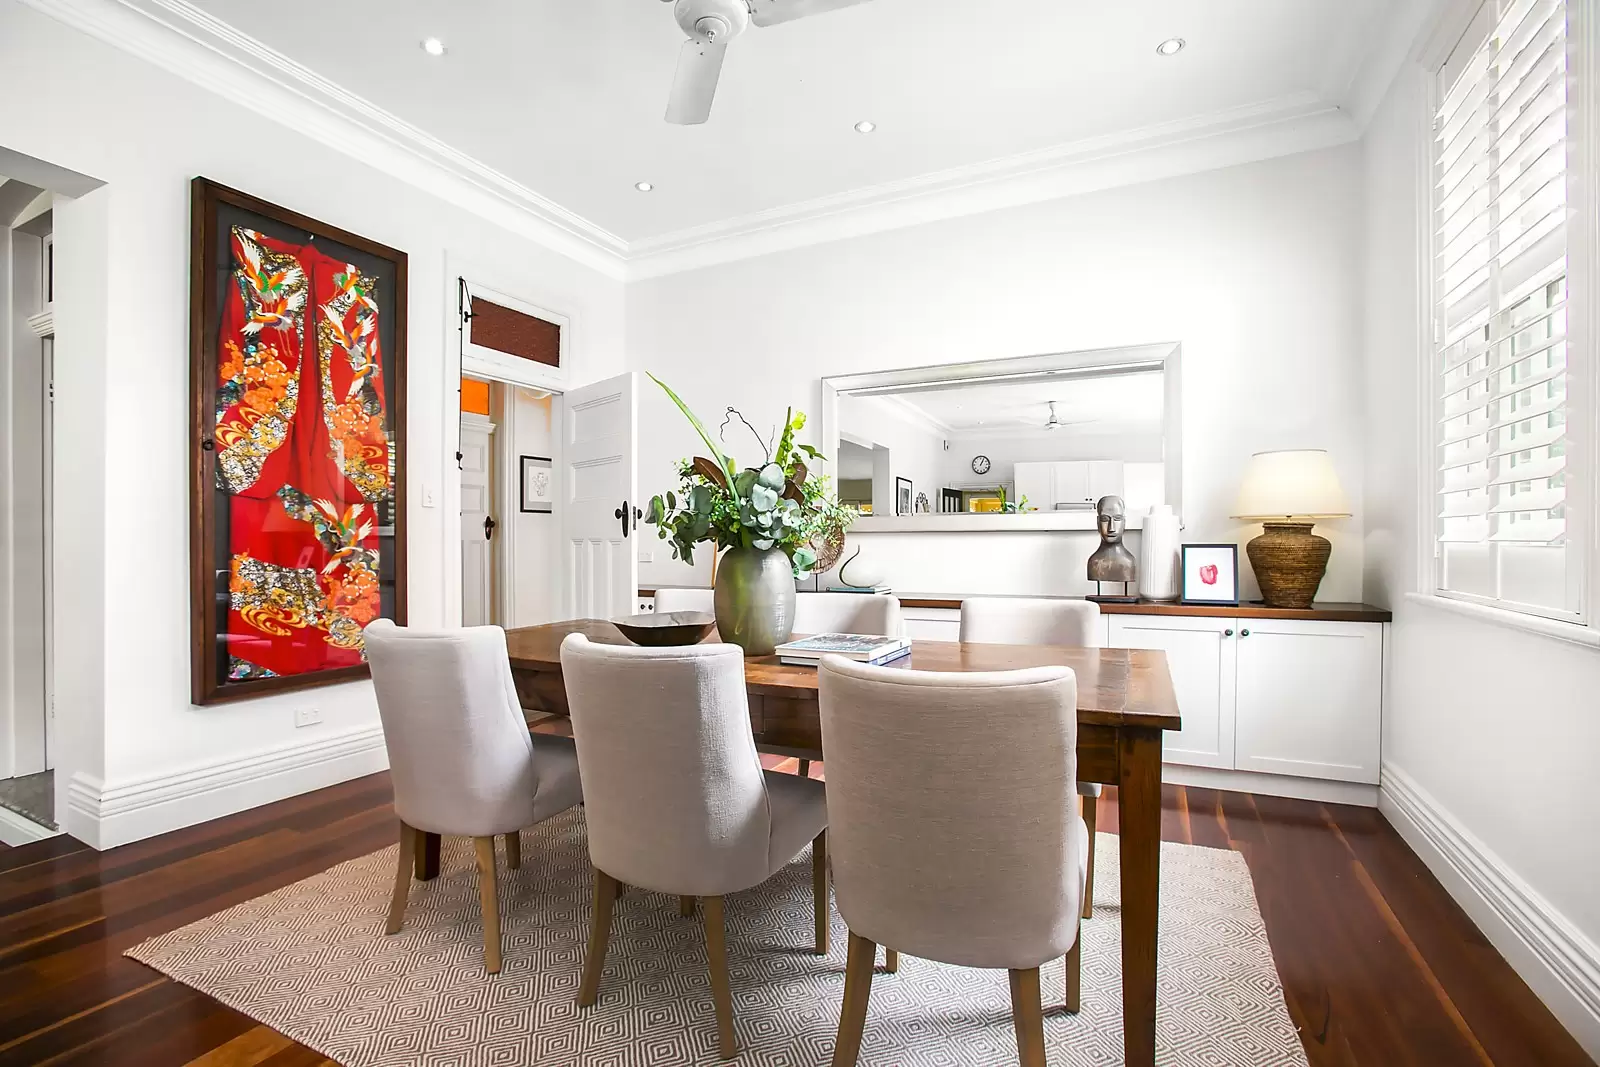 Photo #4: 85 Todman Avenue, Kensington - Sold by Sydney Sotheby's International Realty